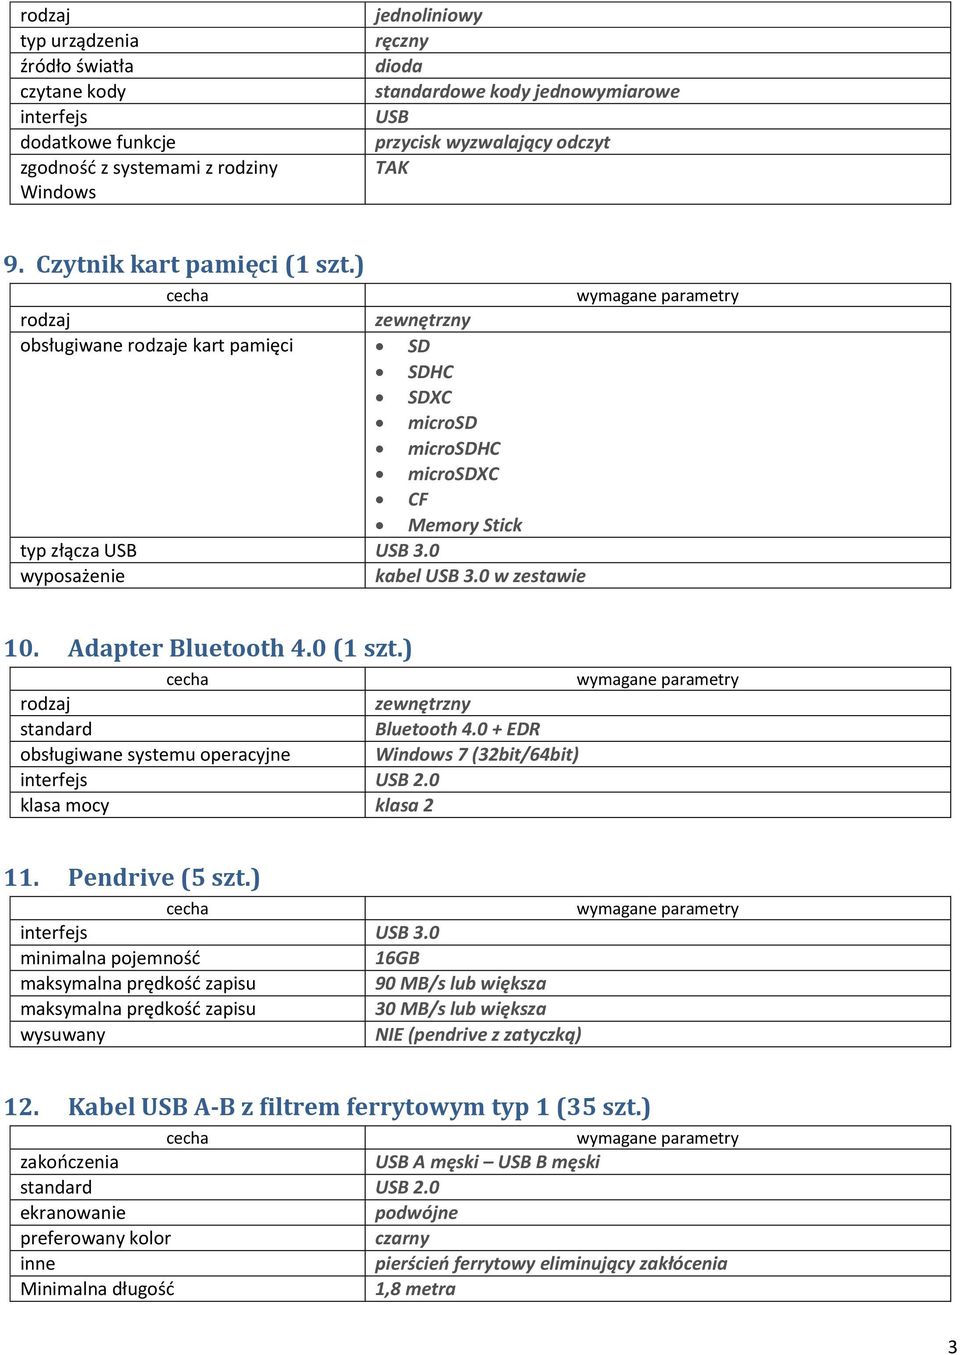 Adapter Bluetooth 4.0 (1 szt.) rodzaj zewnętrzny standard Bluetooth 4.0 + EDR obsługiwane systemu operacyjne Windows 7 (32bit/64bit) interfejs 2.0 klasa mocy klasa 2 11. Pendrive (5 szt.) interfejs 3.